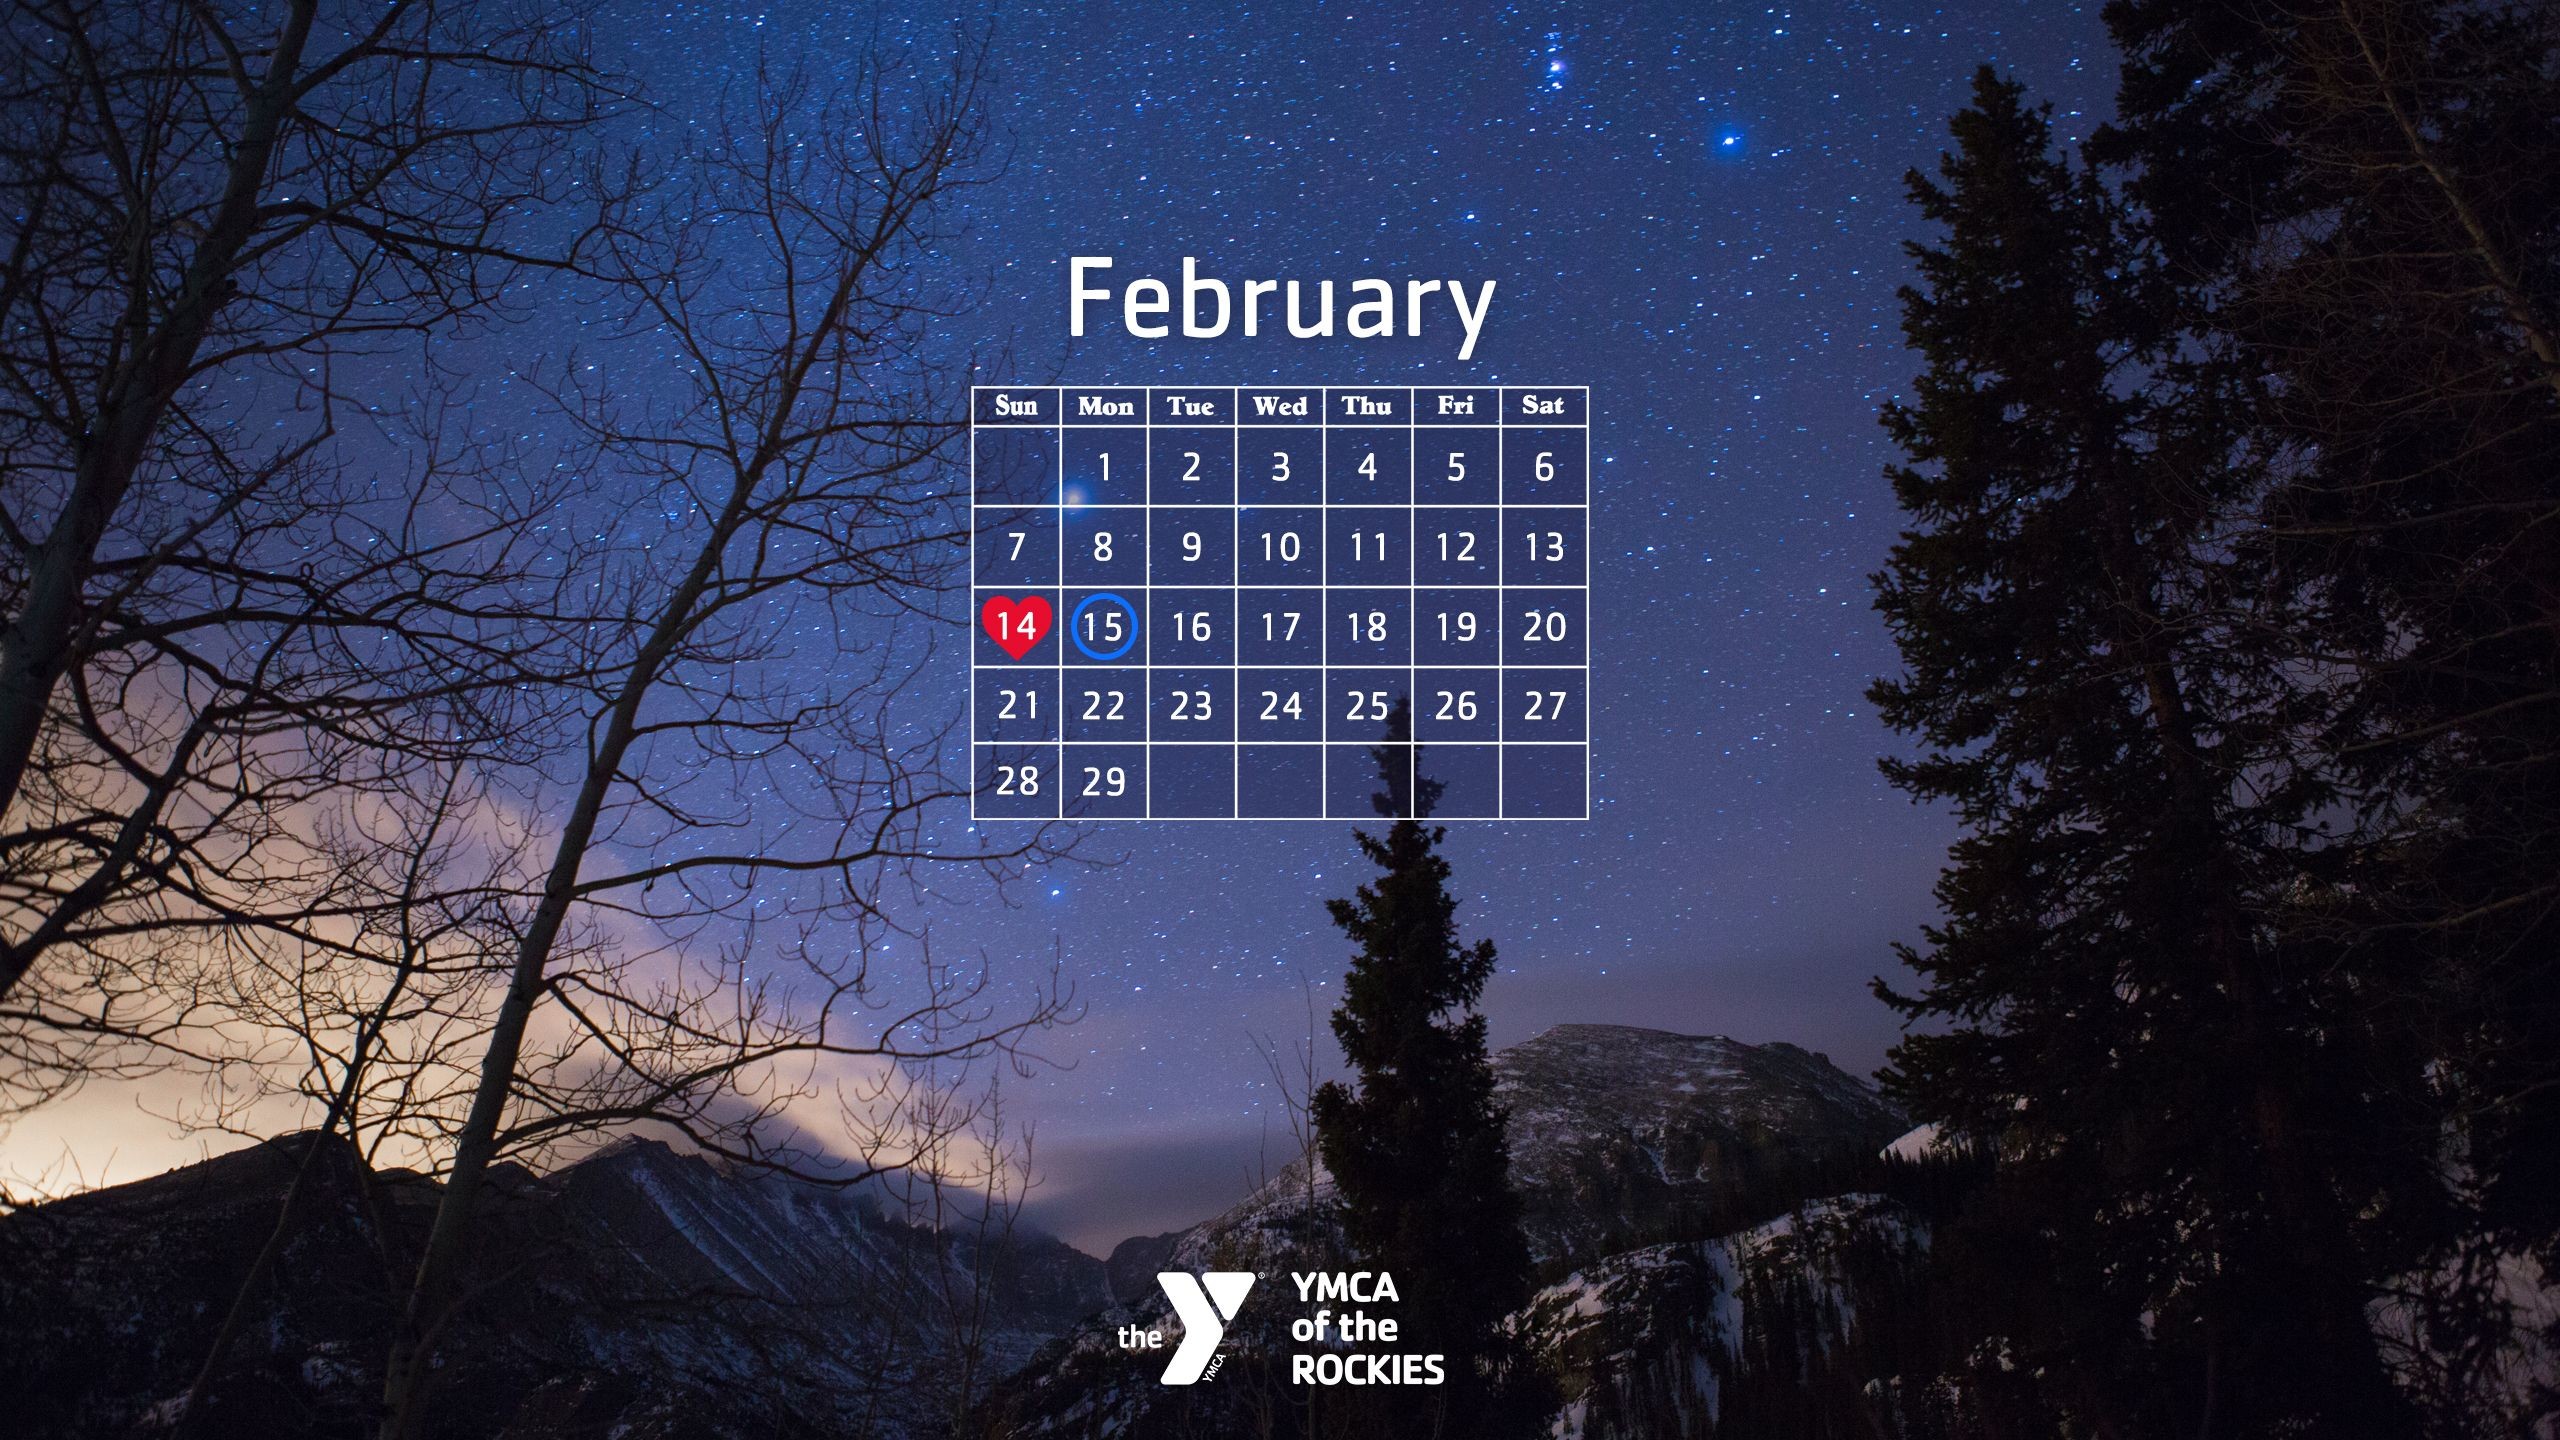 2560x1440 Desktop Wallpaper Calendar 2017 images of february calendar wallpaper  desktop - #sc